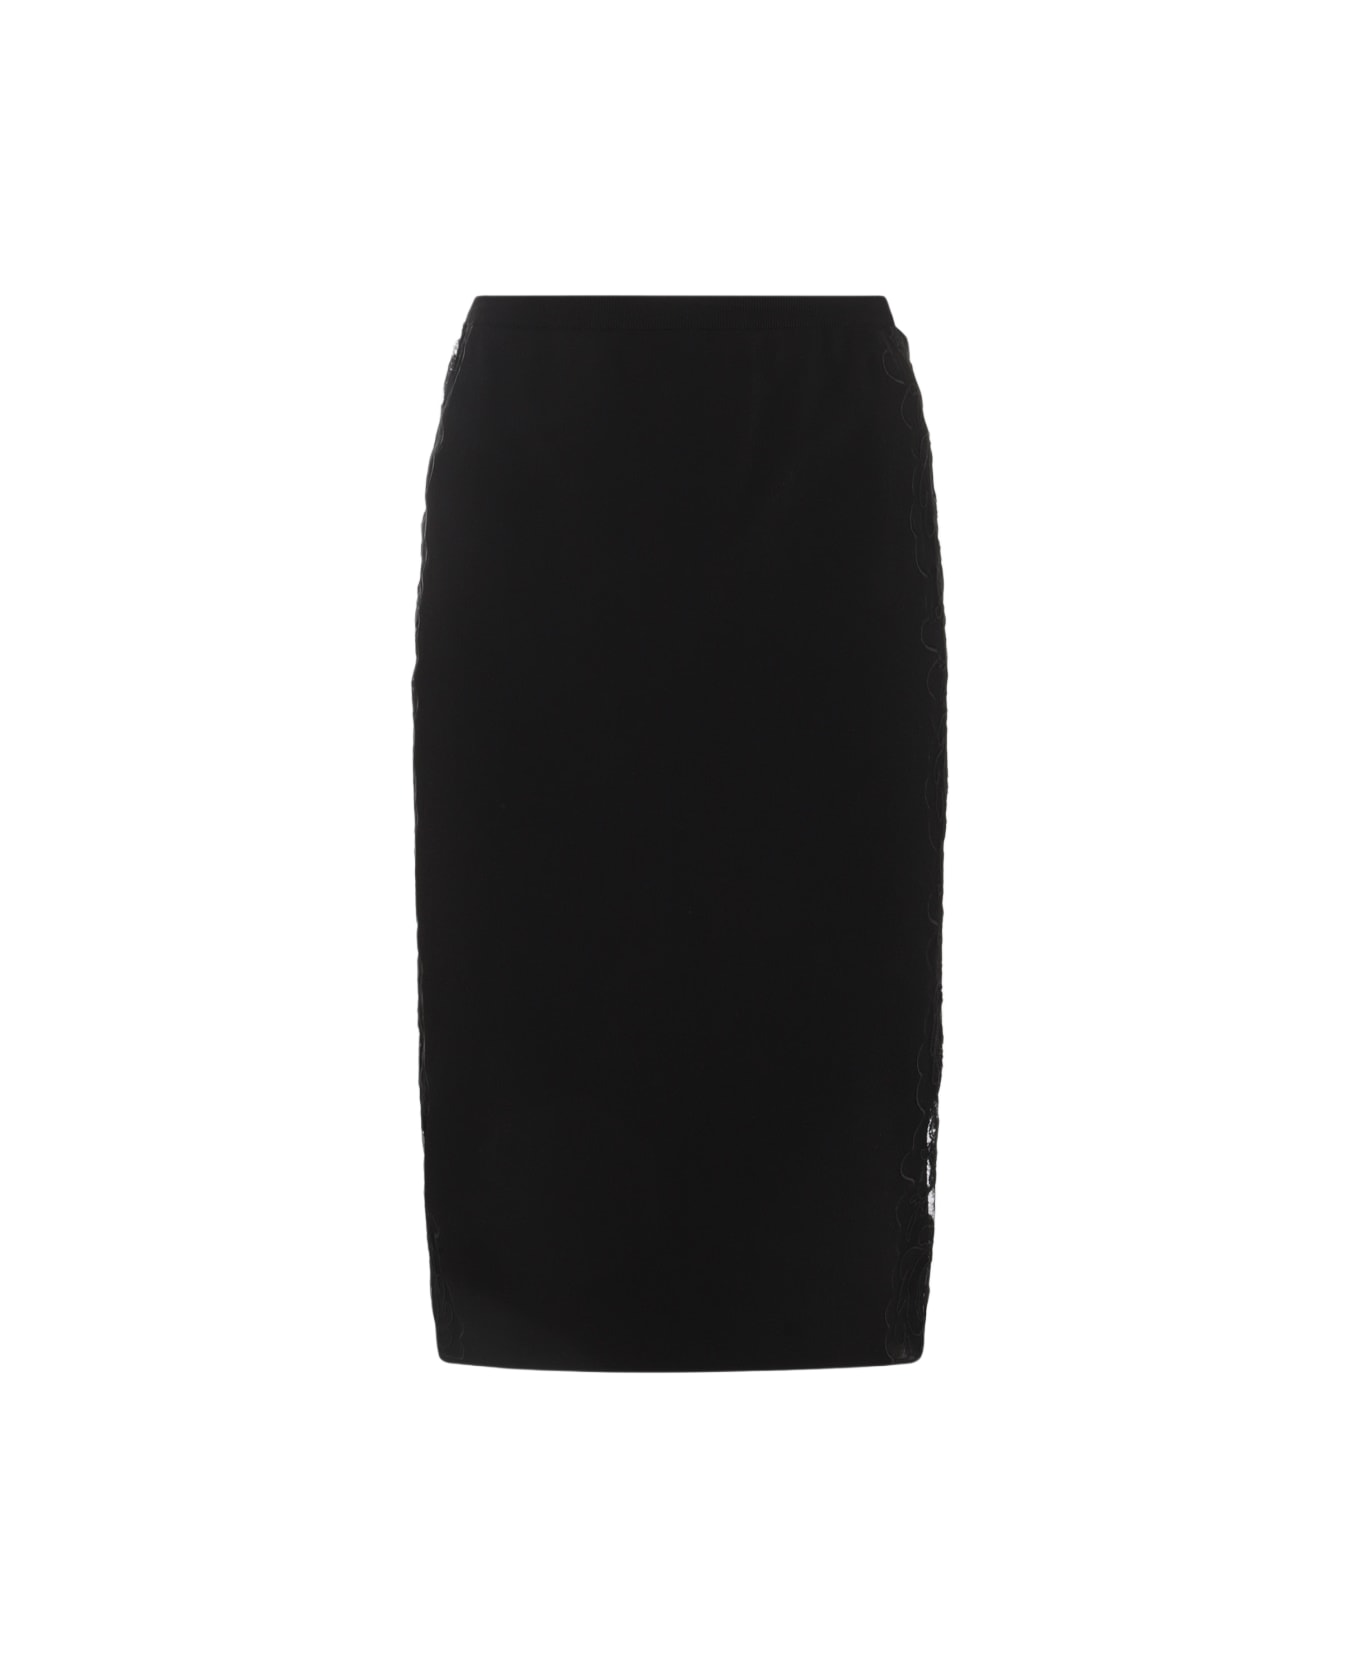 Versace Black Viscose Blend Skirt - Black